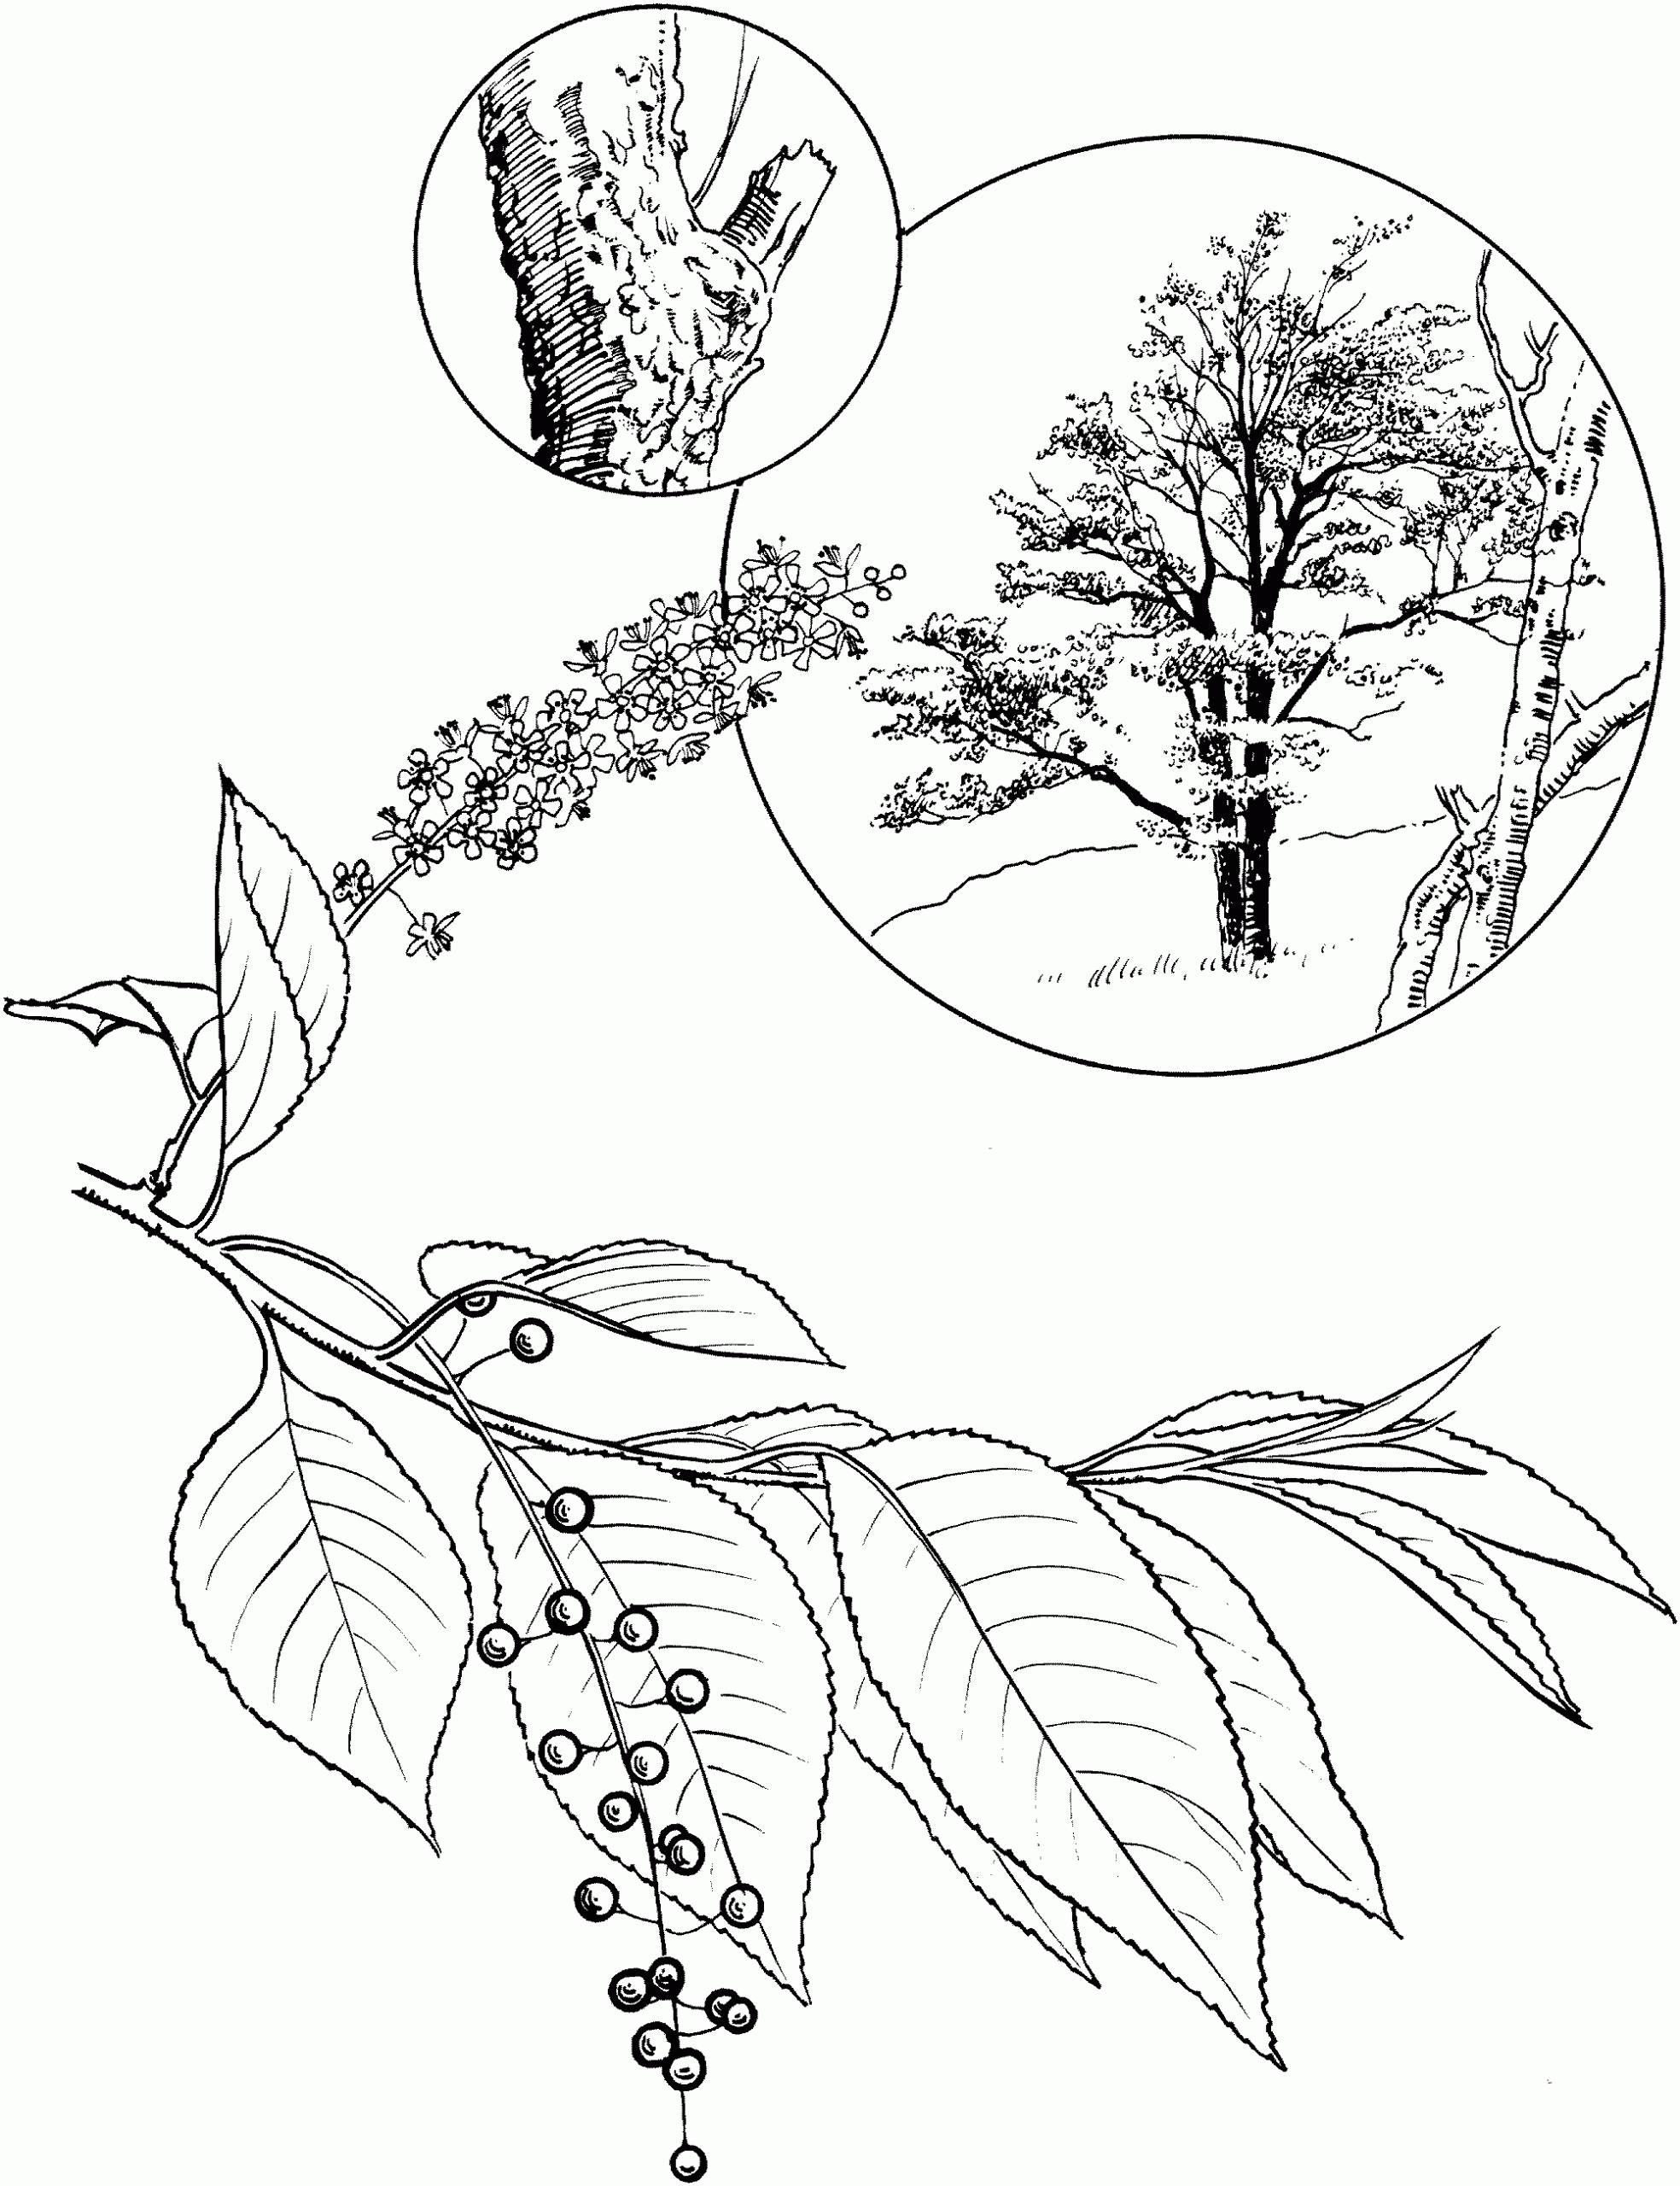 Bird cherry shrub